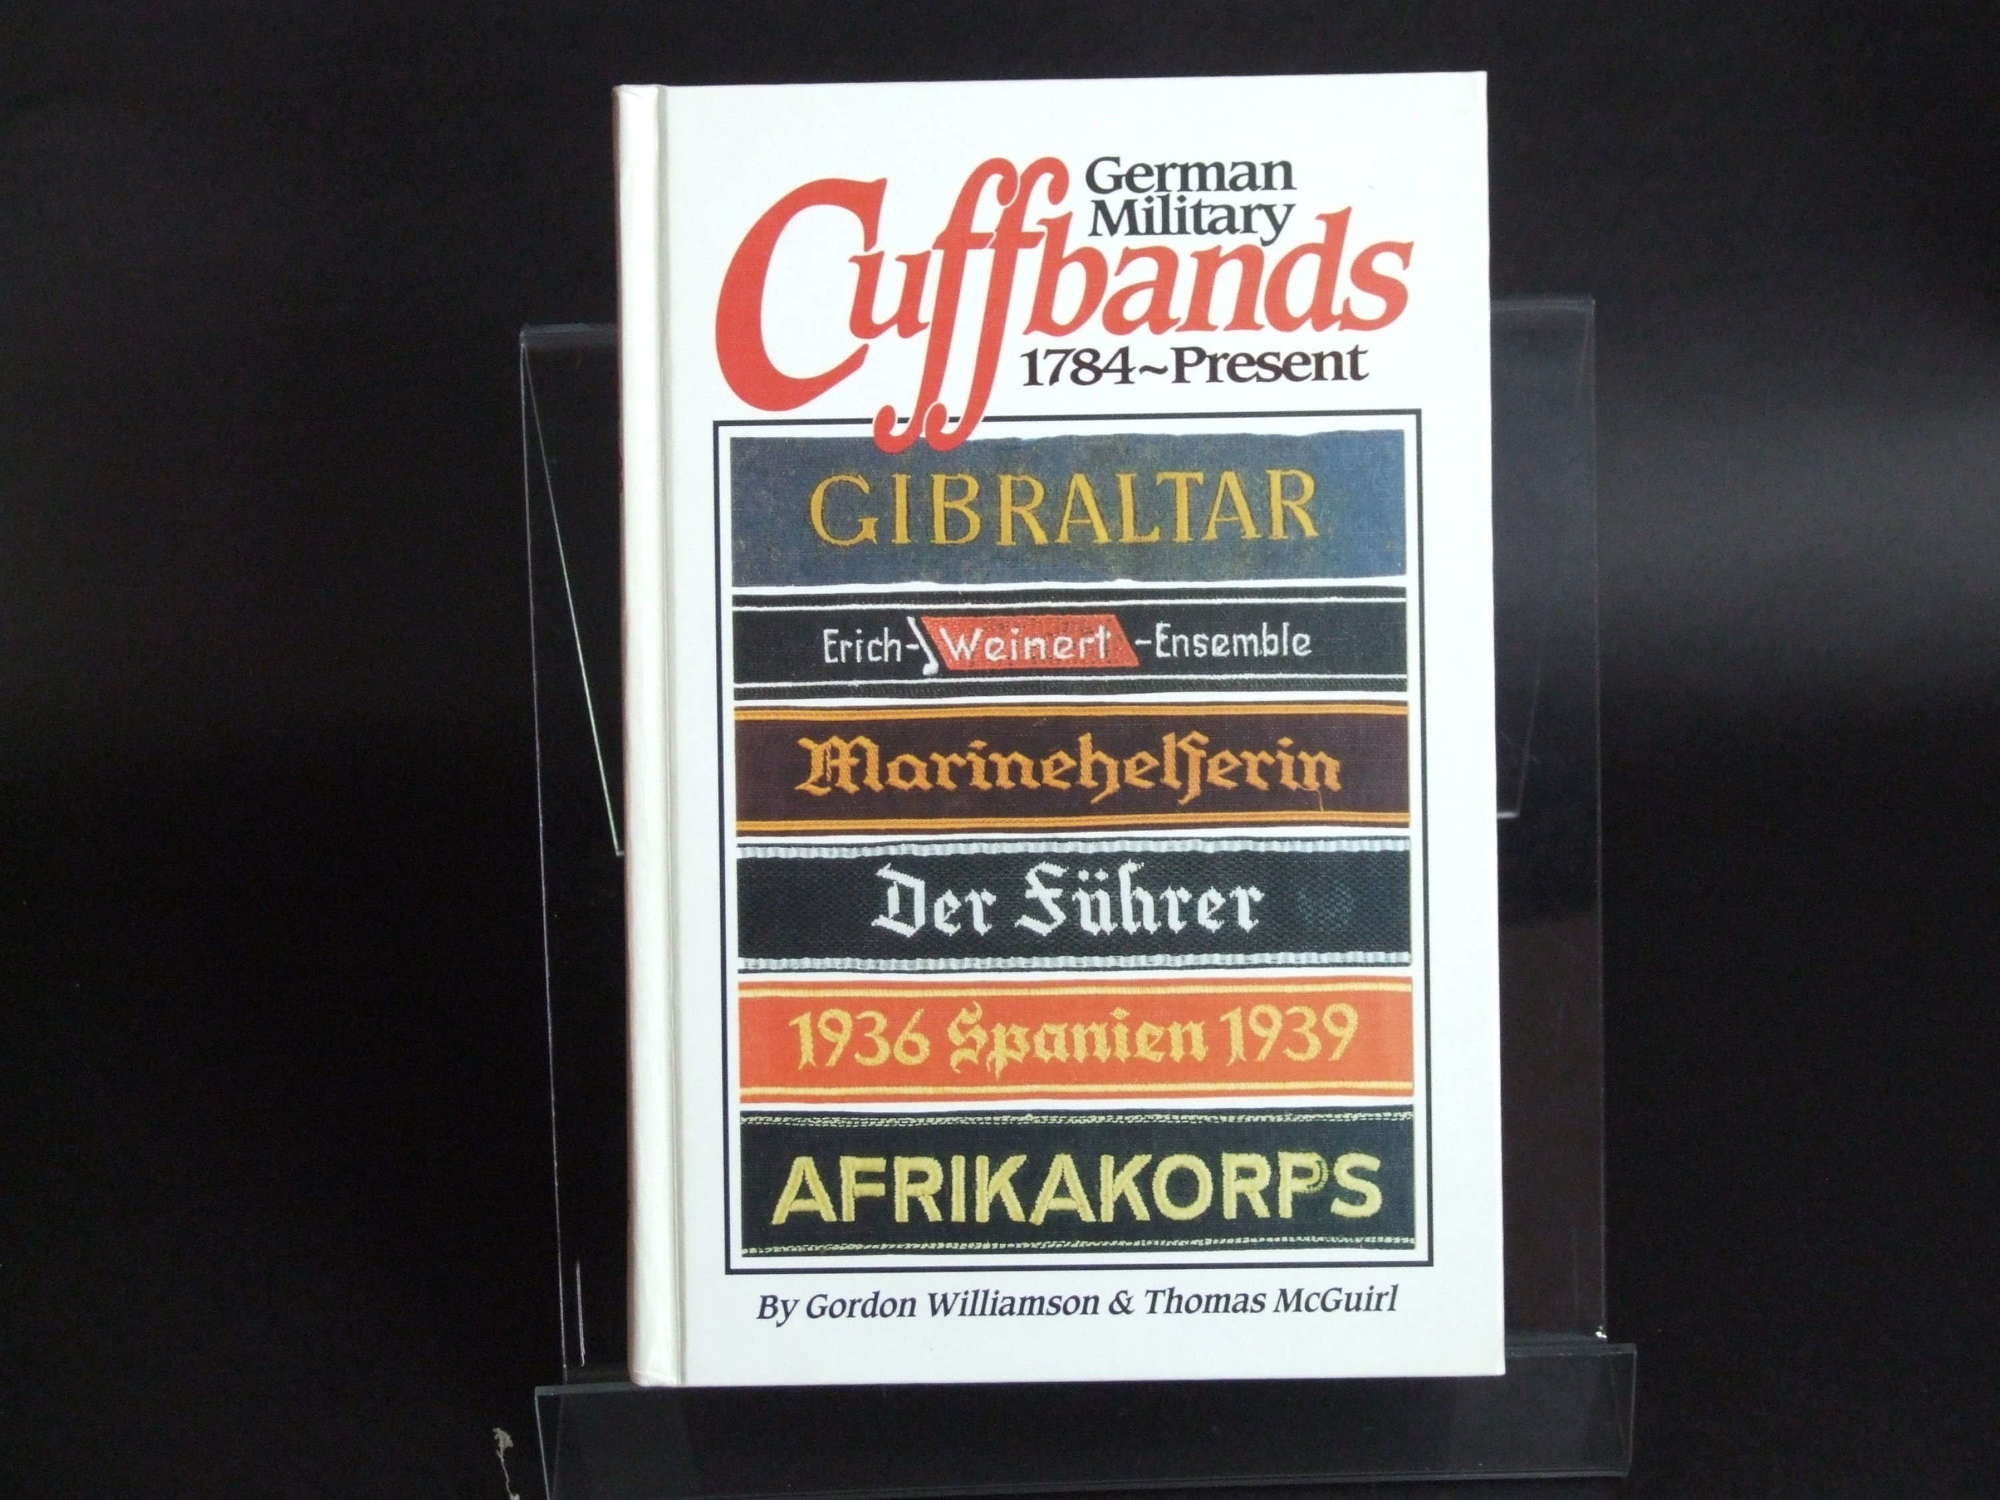 German Military Cuffbands by Gordon Williamson